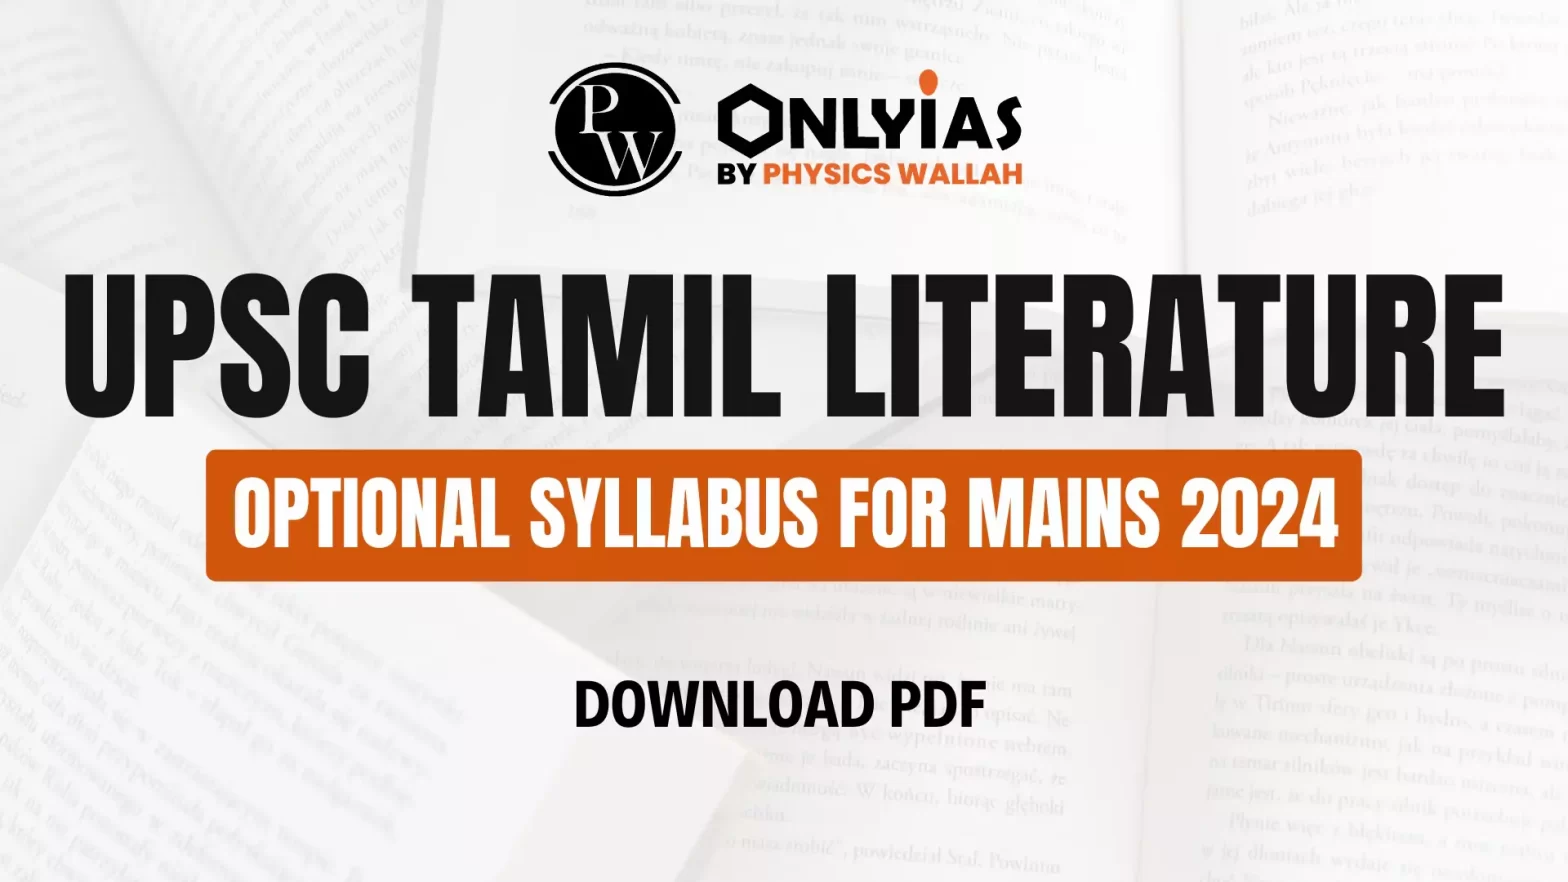 UPSC Tamil Literature Optional Syllabus for Mains 2024, Download PDF